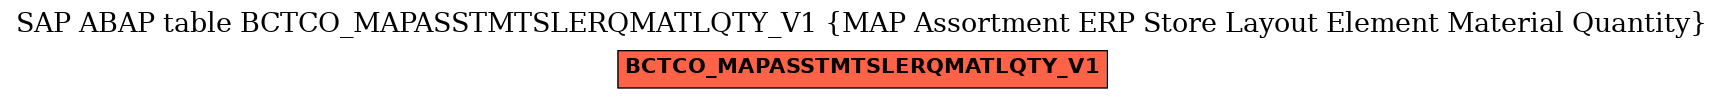 E-R Diagram for table BCTCO_MAPASSTMTSLERQMATLQTY_V1 (MAP Assortment ERP Store Layout Element Material Quantity)